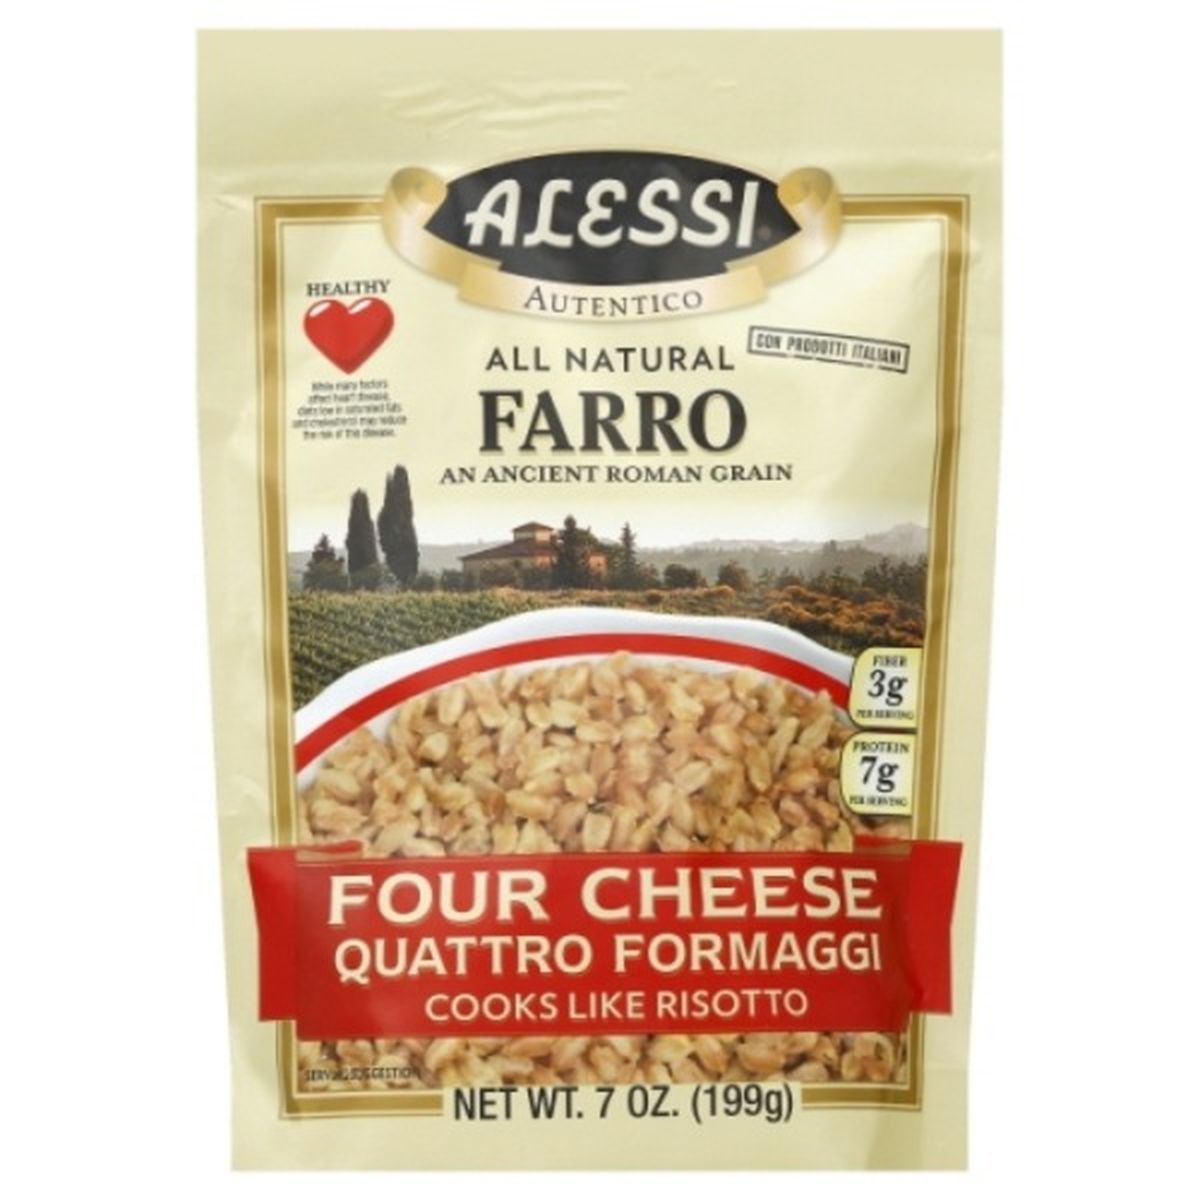 Calories in Alessi Farro, Four Cheese